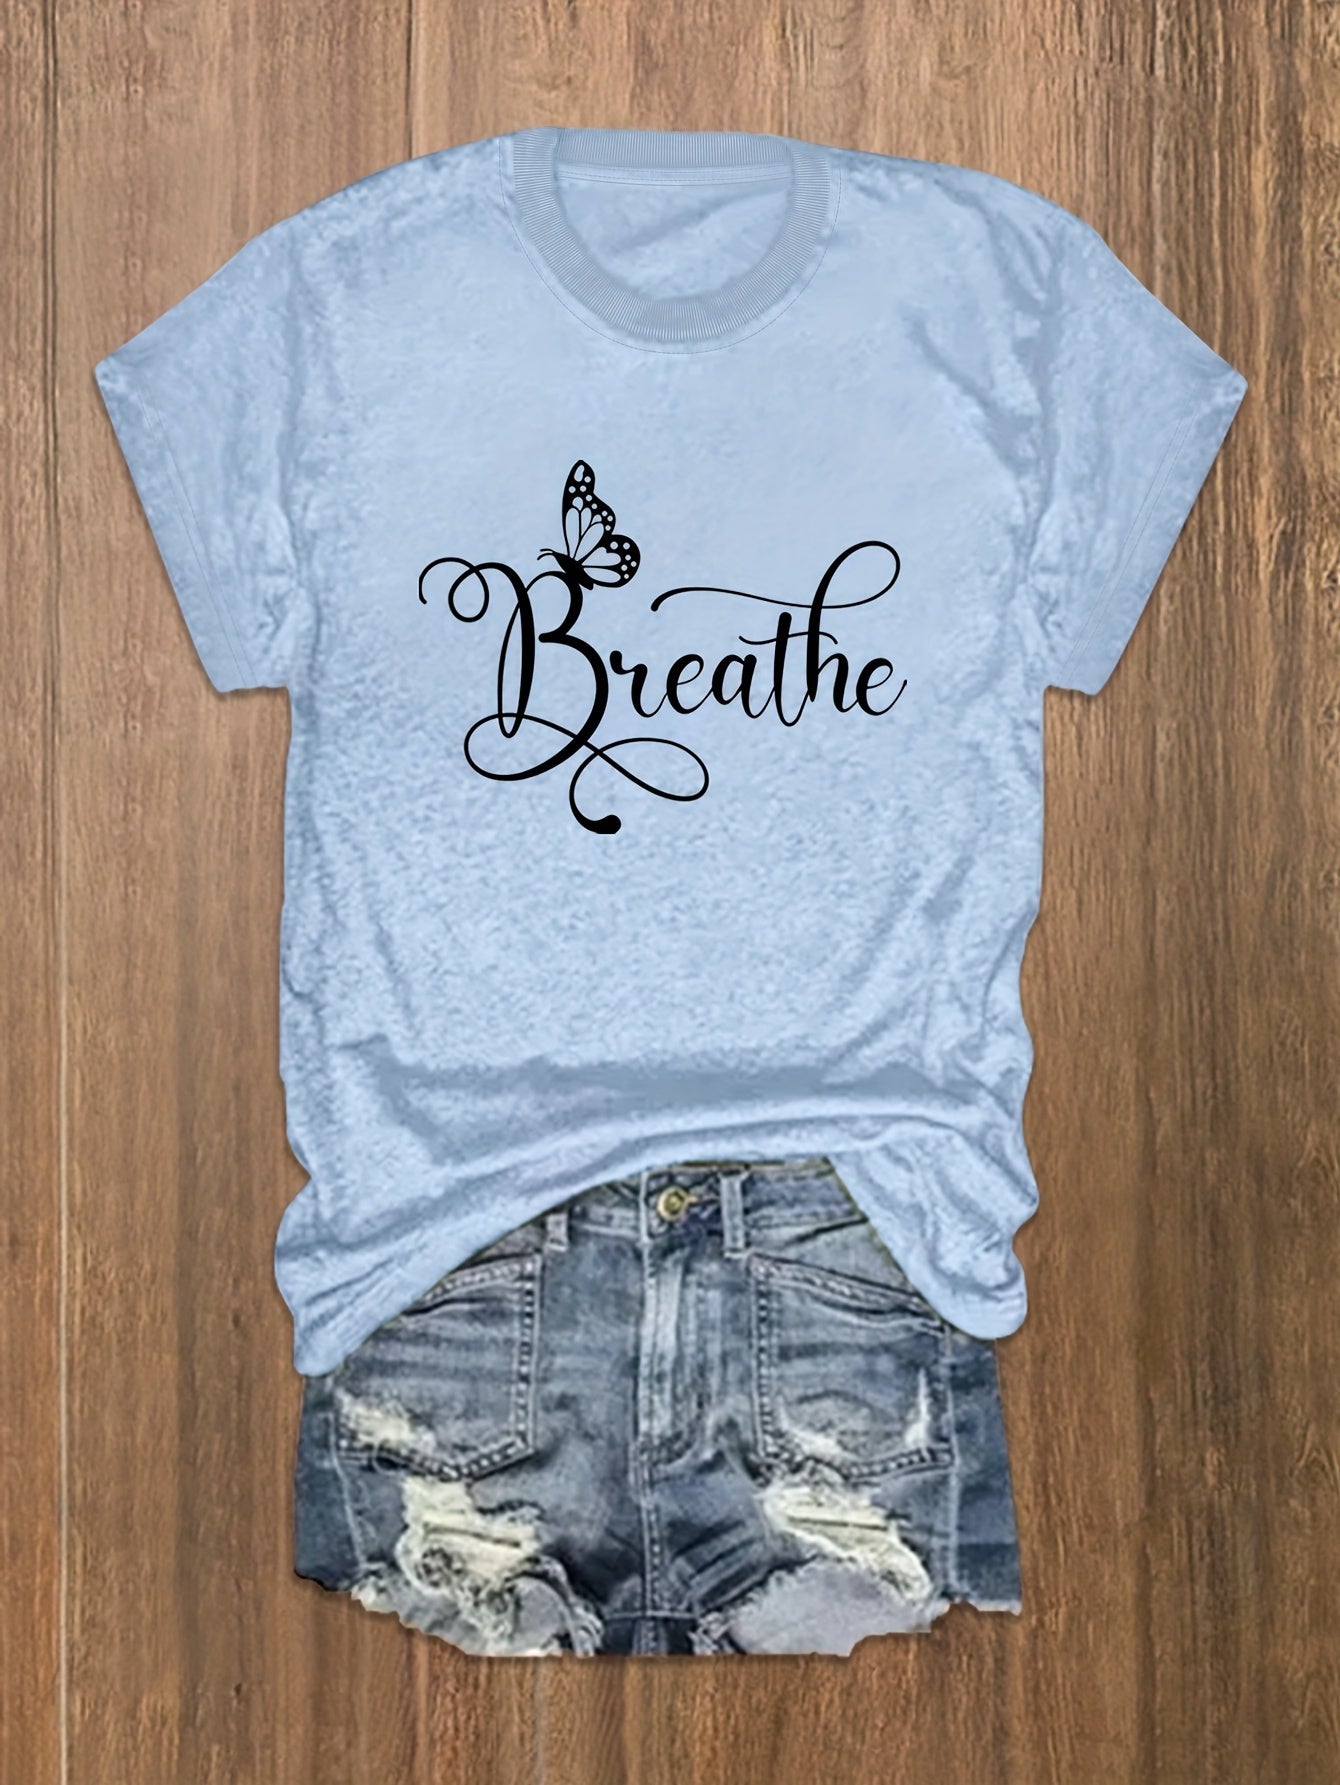 Breathe Plus Size Women's Christian T-shirt claimedbygoddesigns